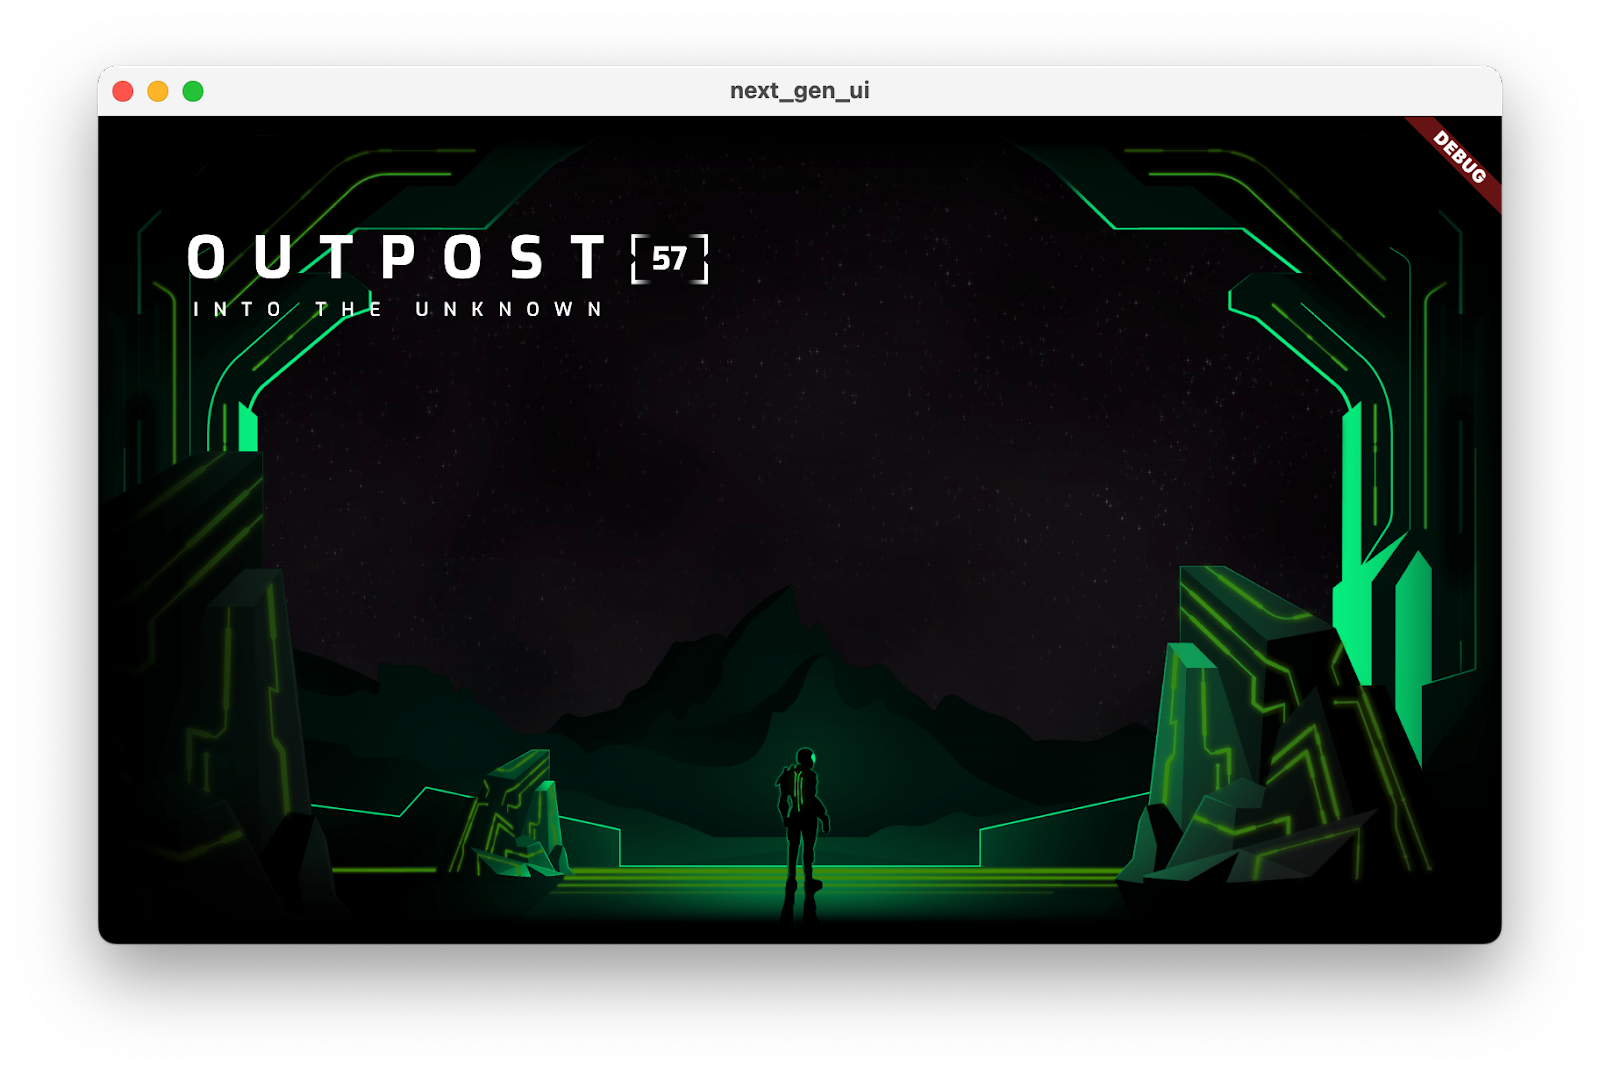 运行标题为“Outpost [57] Into the Unknown”的 Codelab 应用